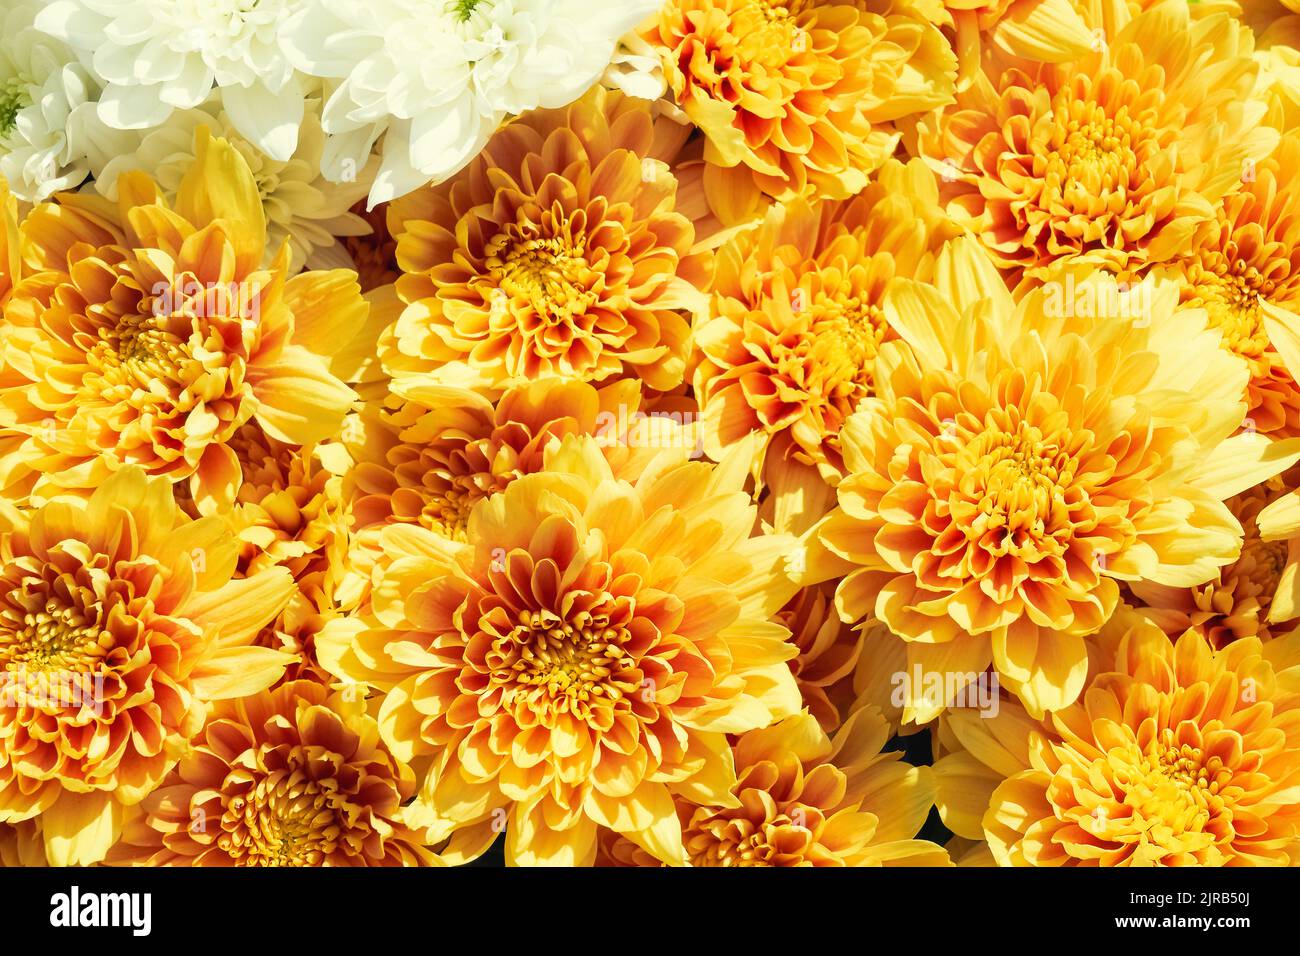 Flowers decoration. Yellow chrysanthemum flowers background. Top view. Stock Photo